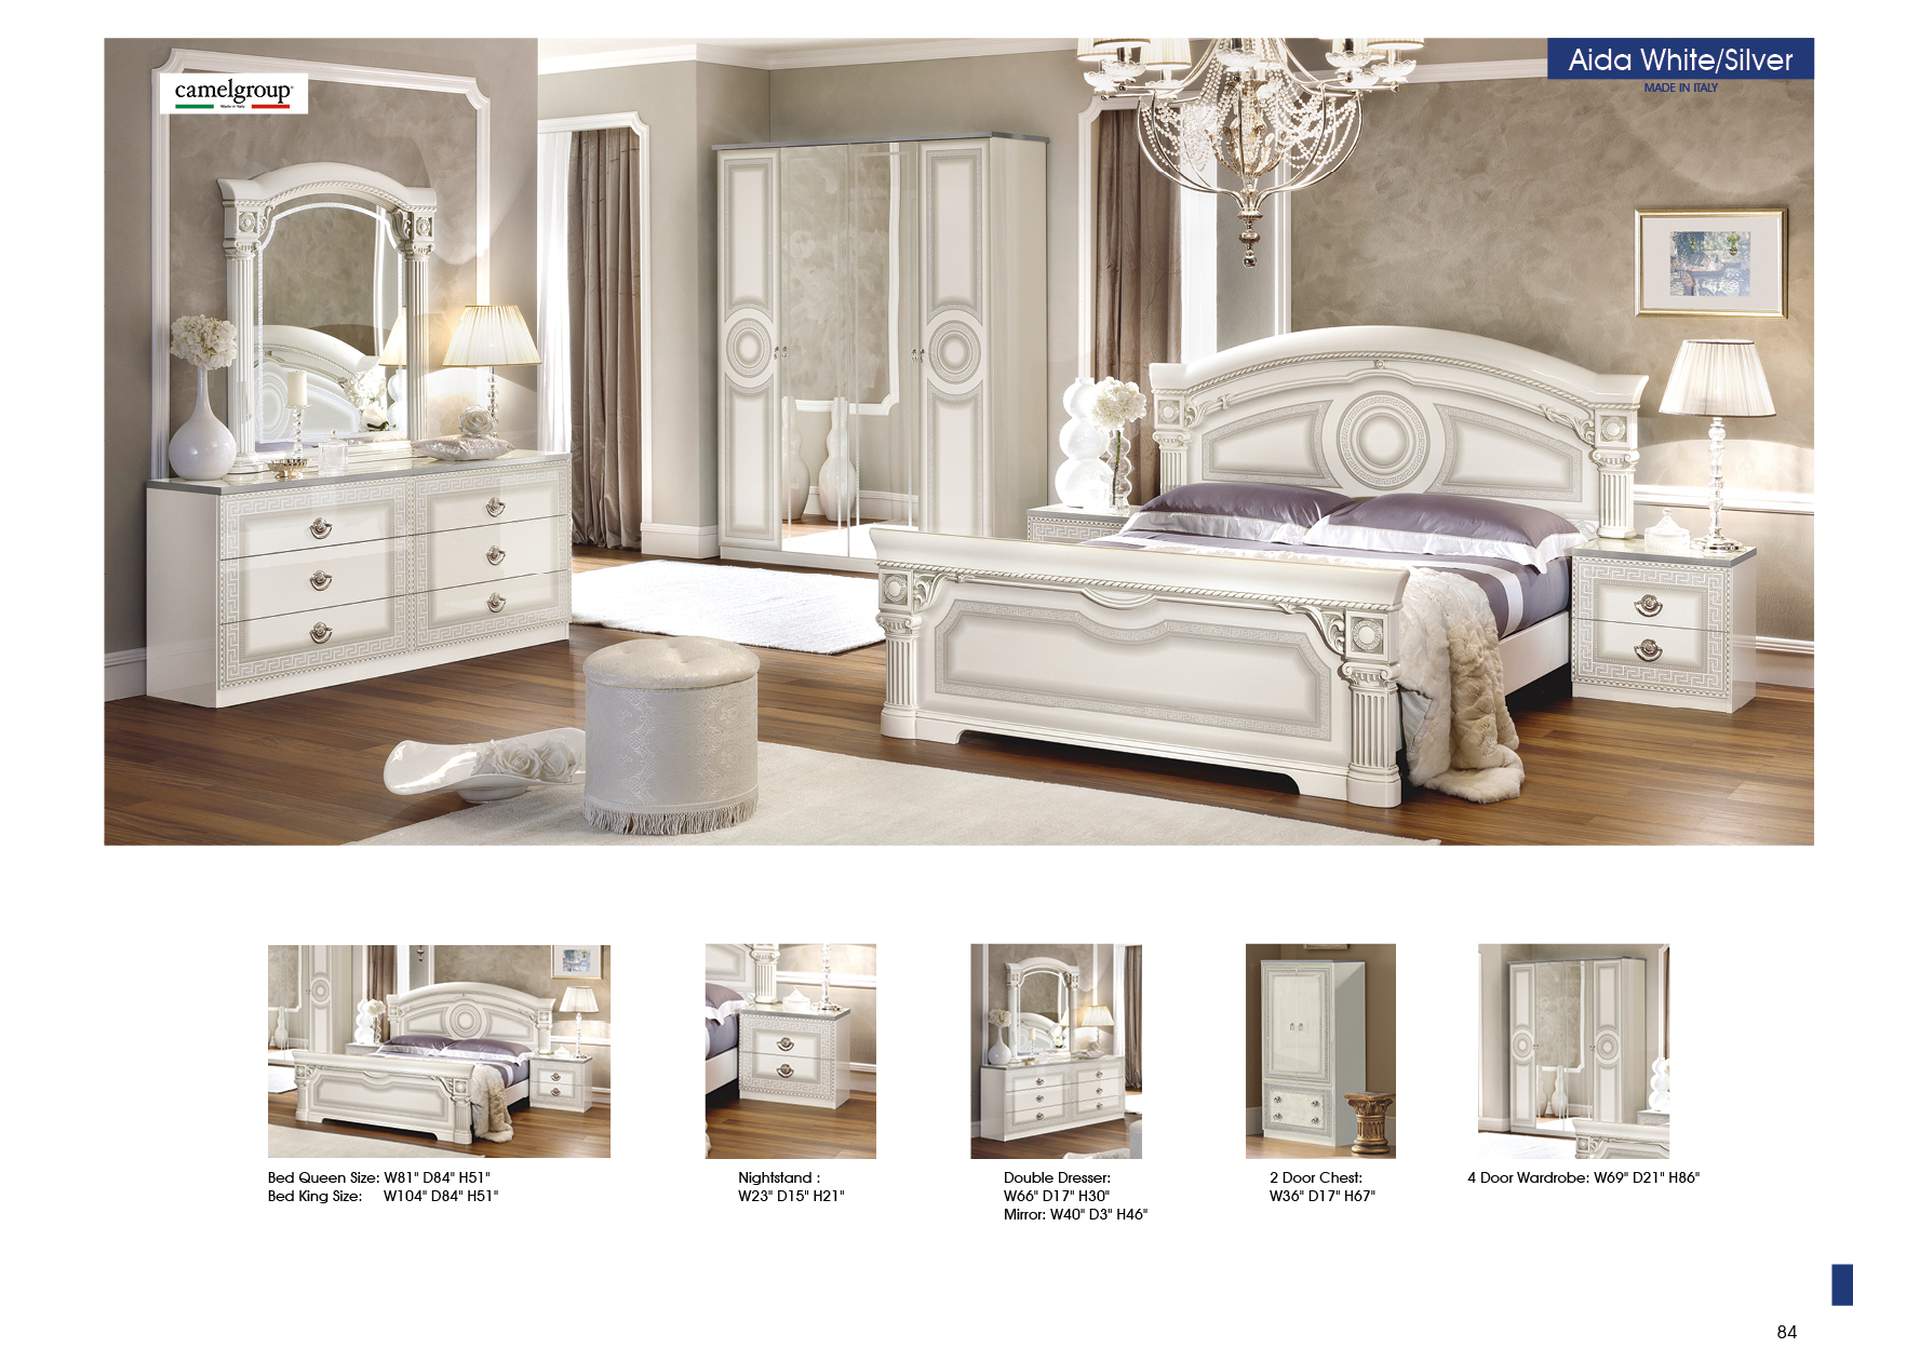 Aida White with Silver 4-door Wardrobe,ESF Wholesale Furniture